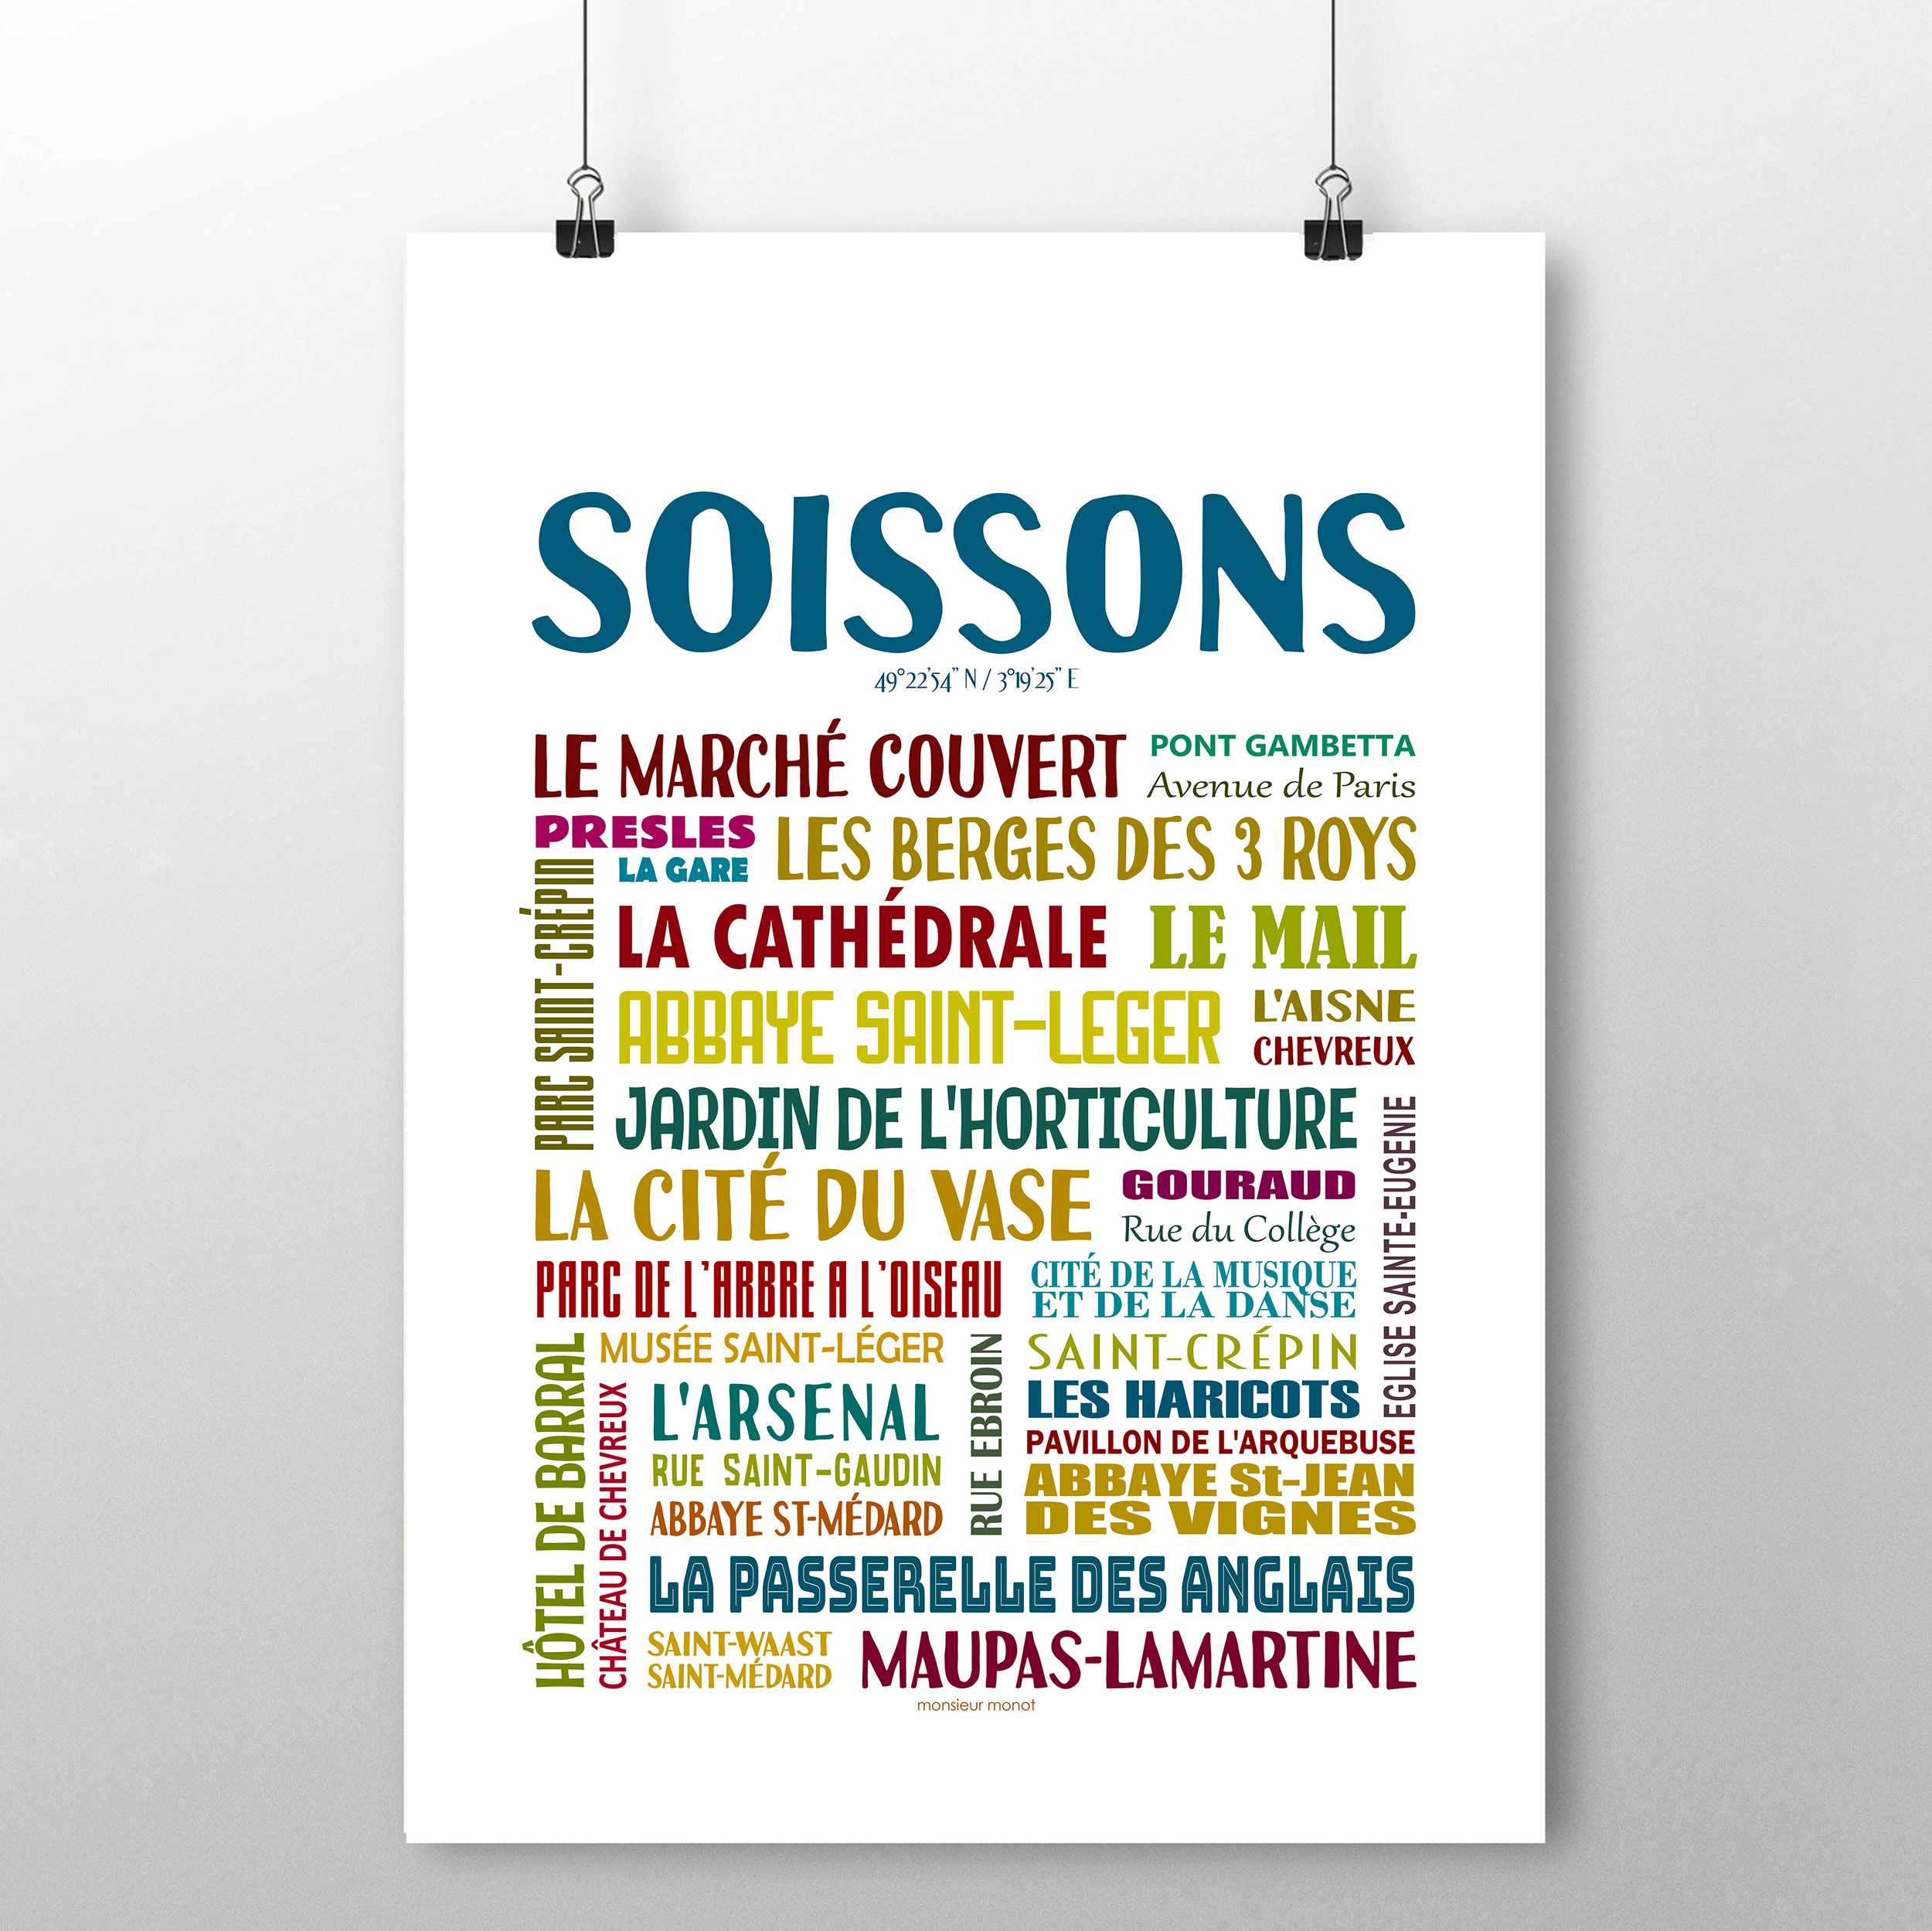 Soissons 2